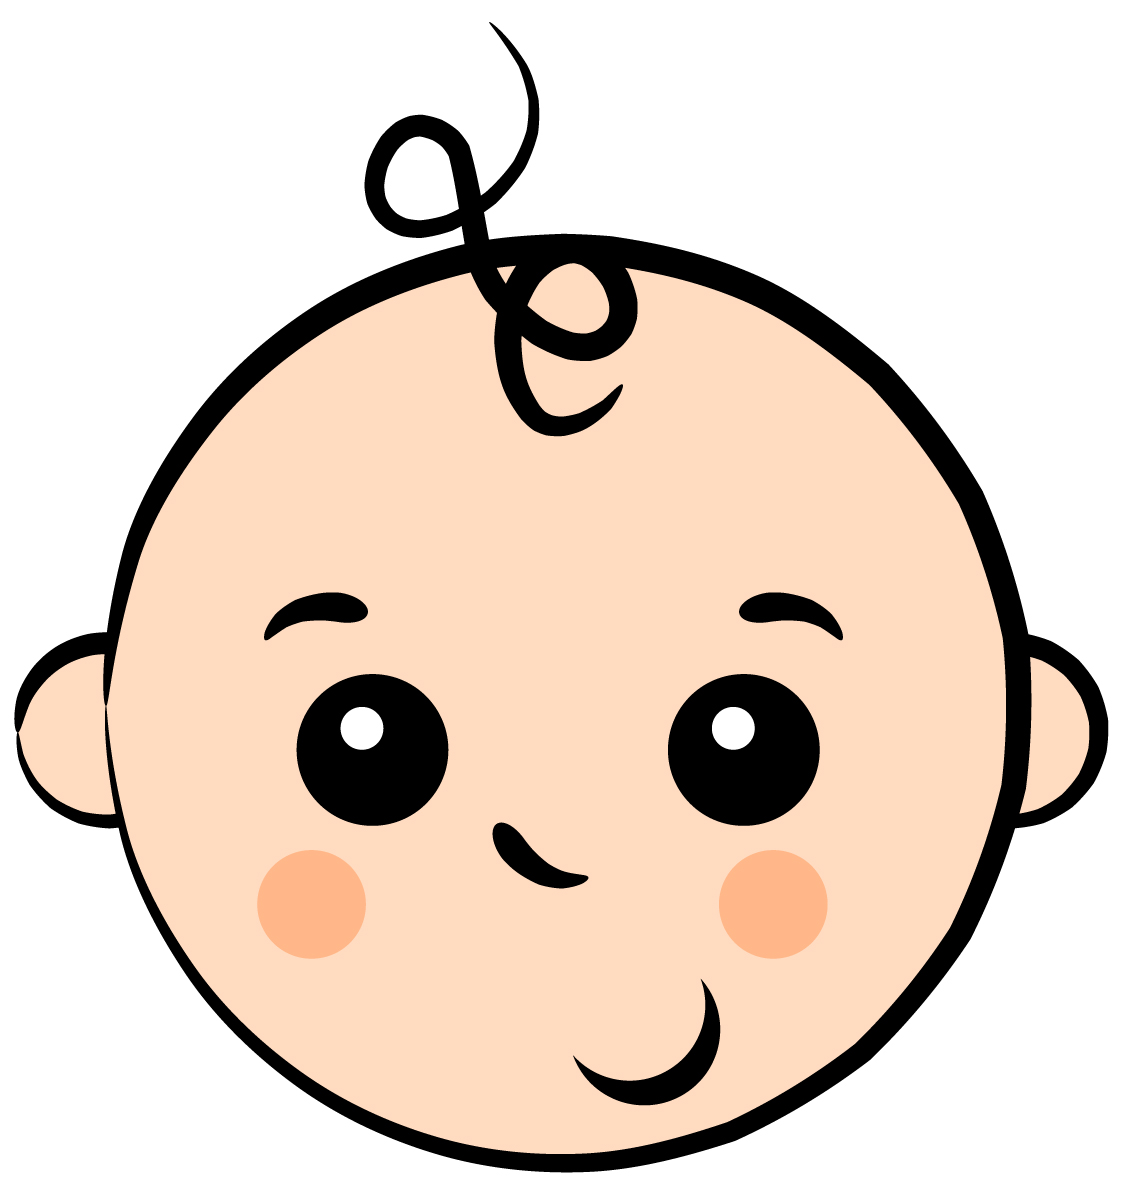 Clip art baby face - ClipartF